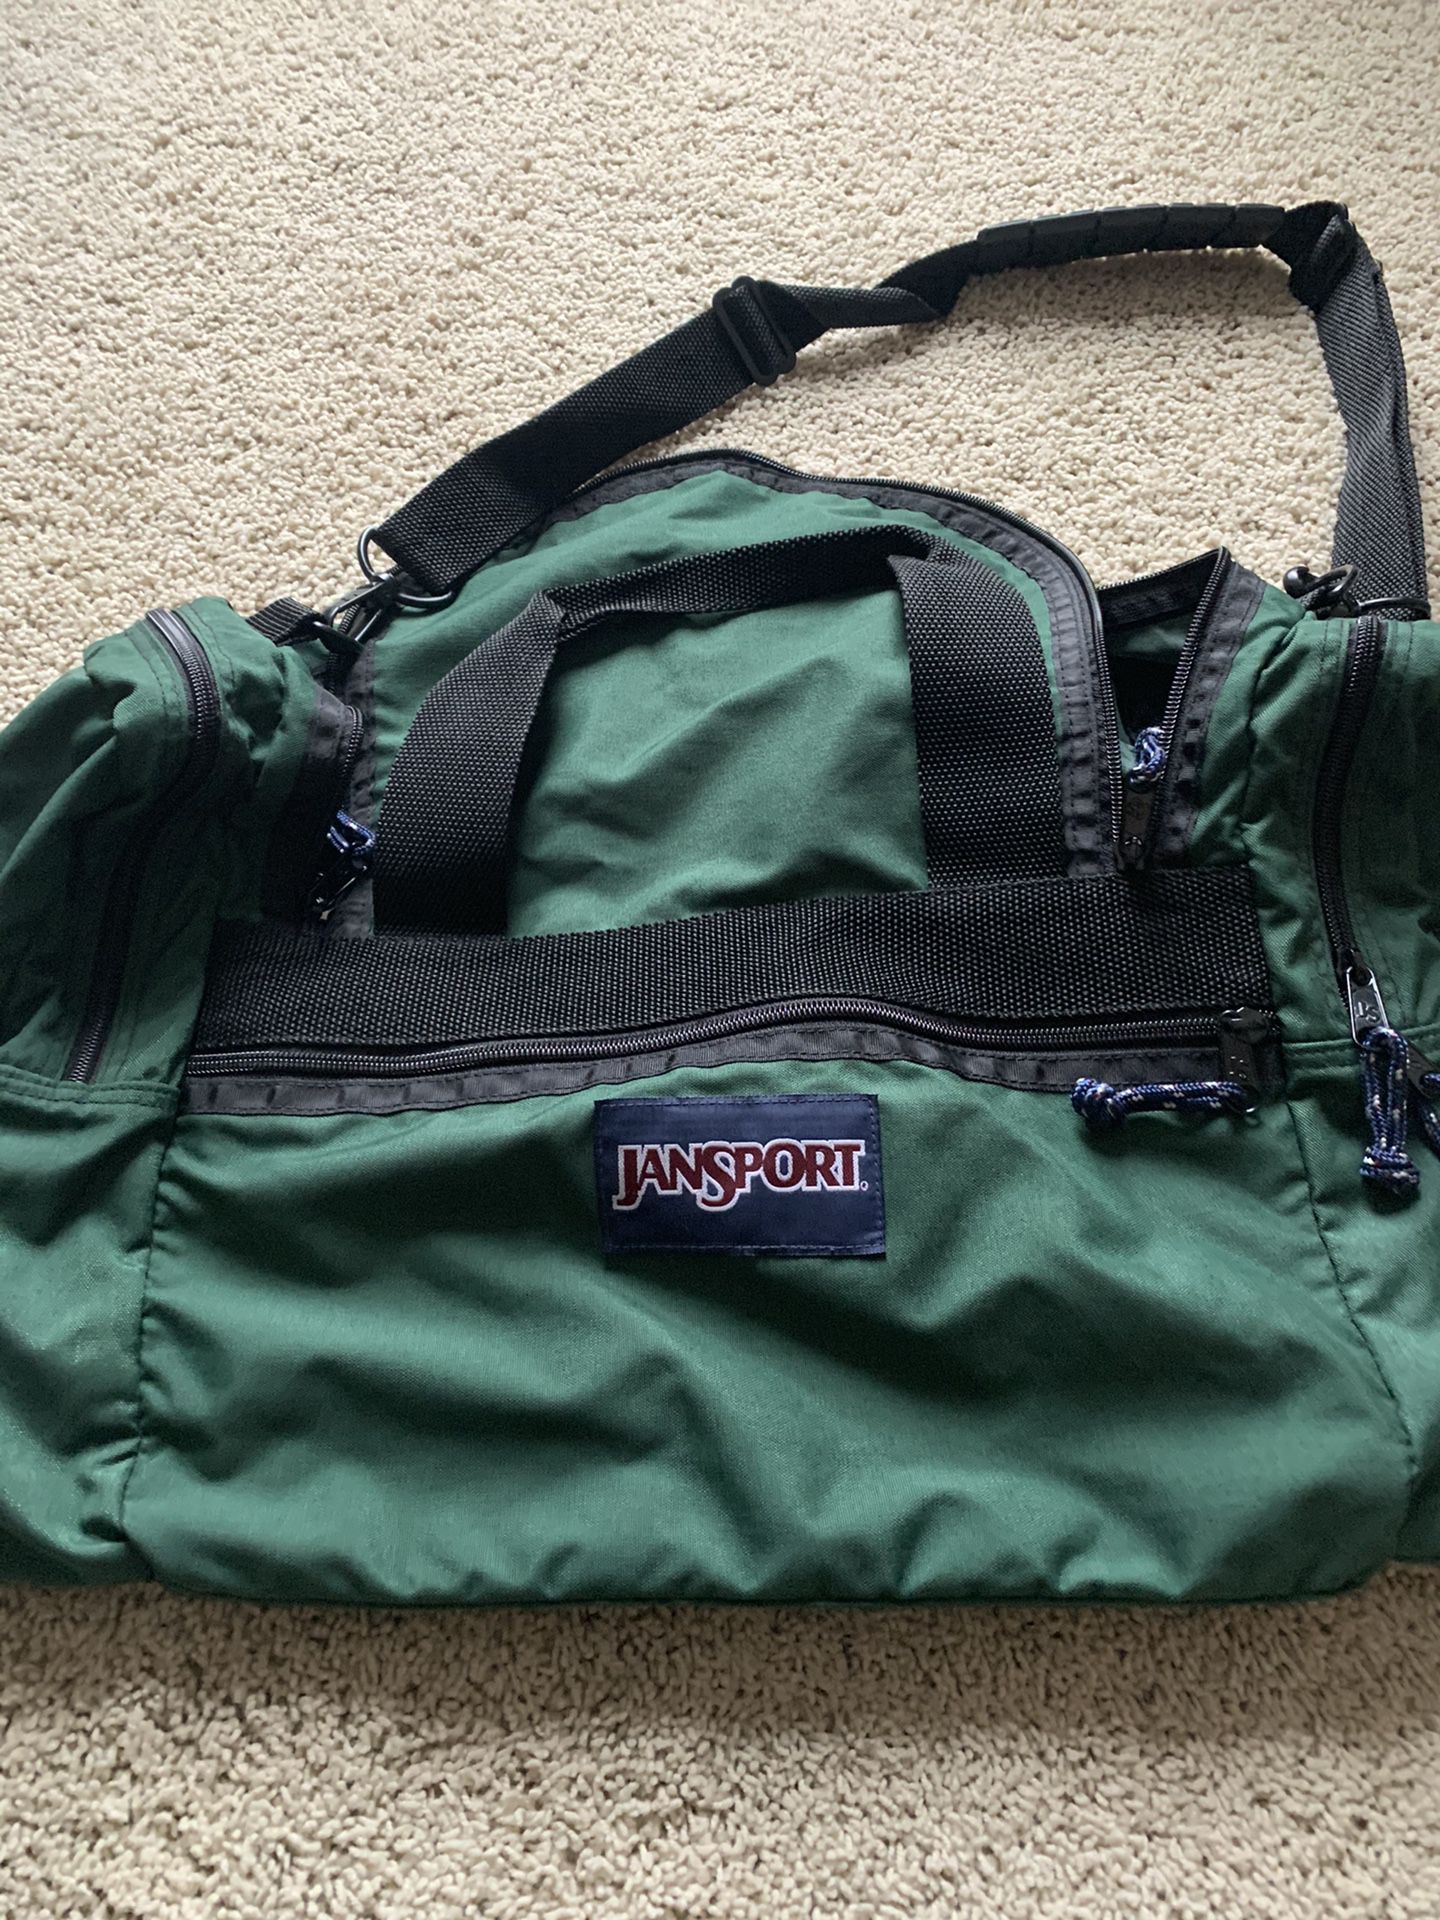 Jansport Green Duffle Bag